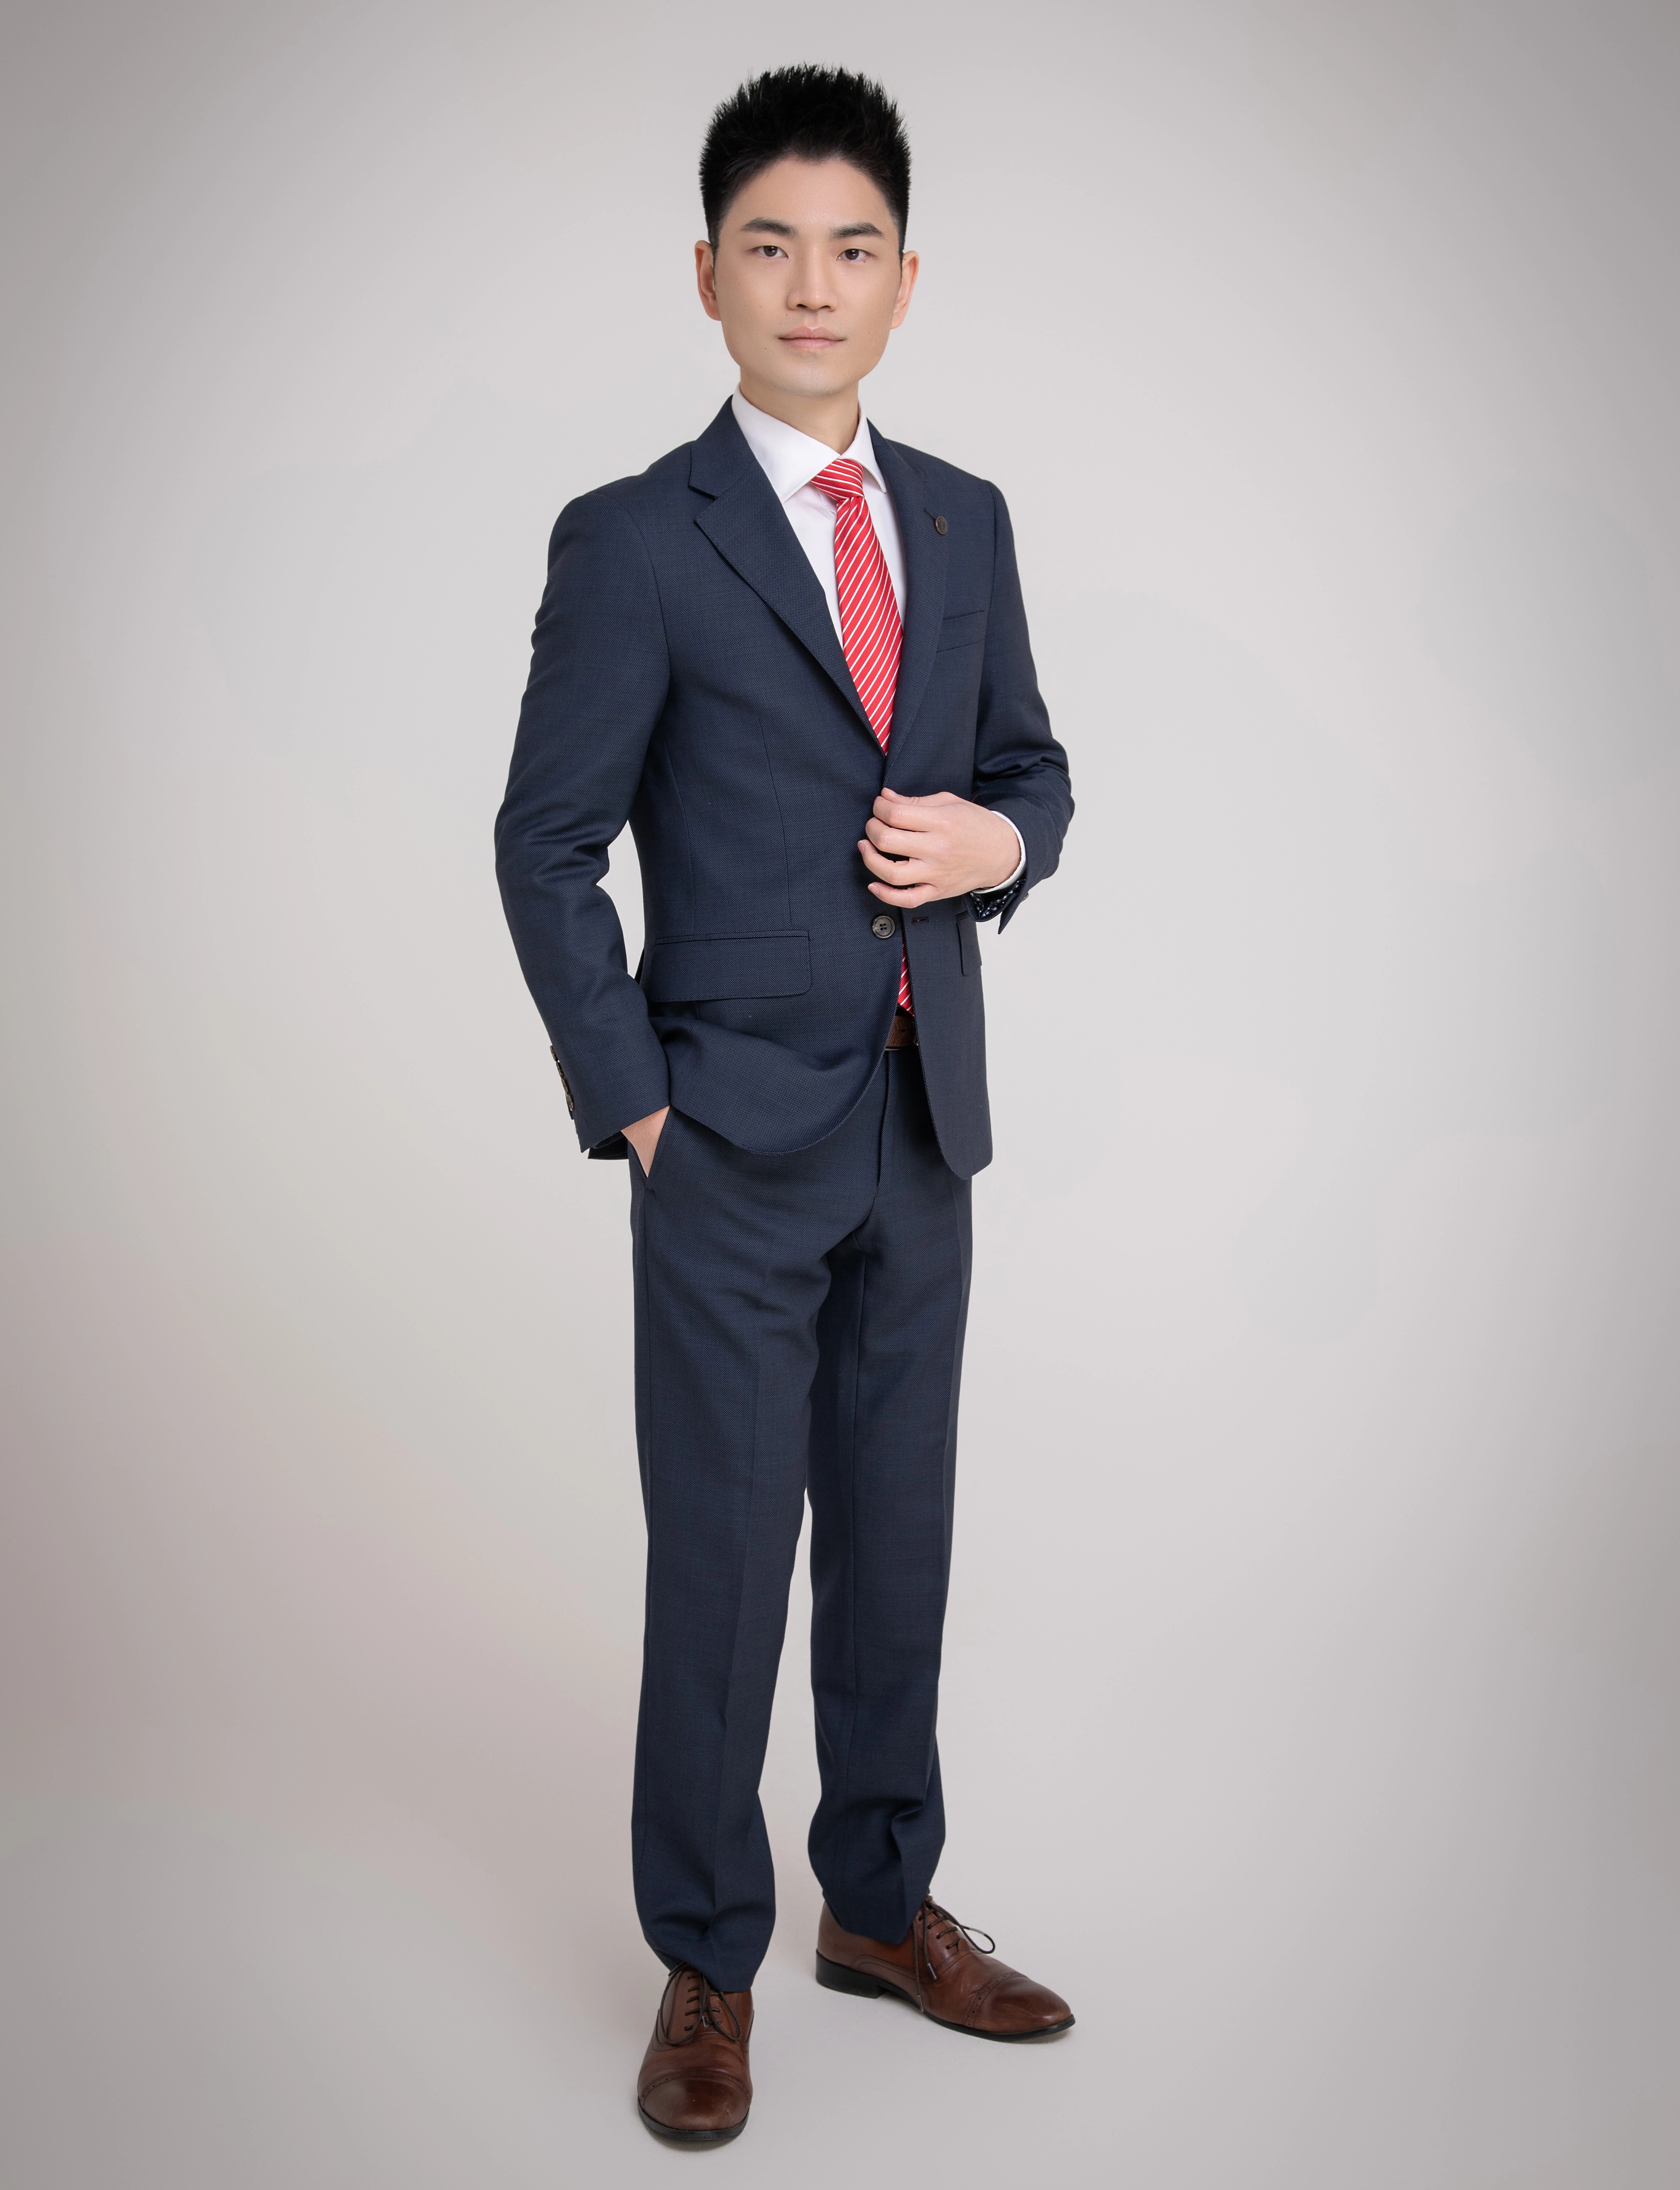 Jun Zeng Real Estate Agent